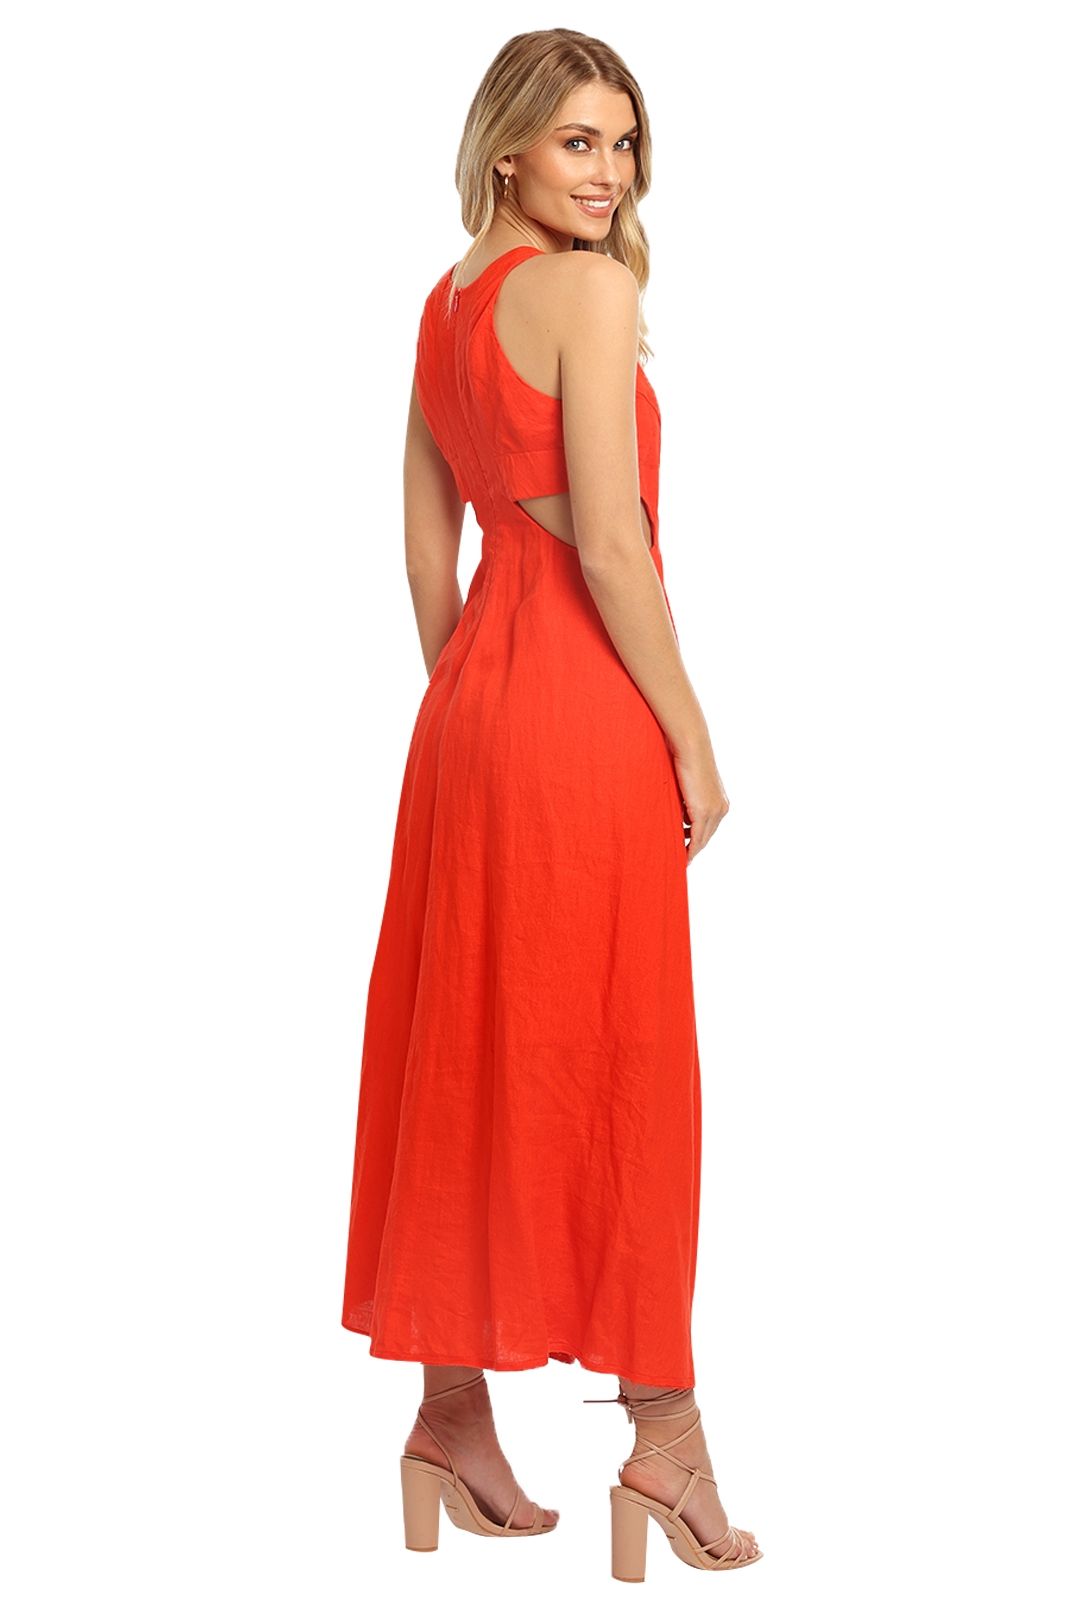 Kitx Faithful Love Dress Red Midi